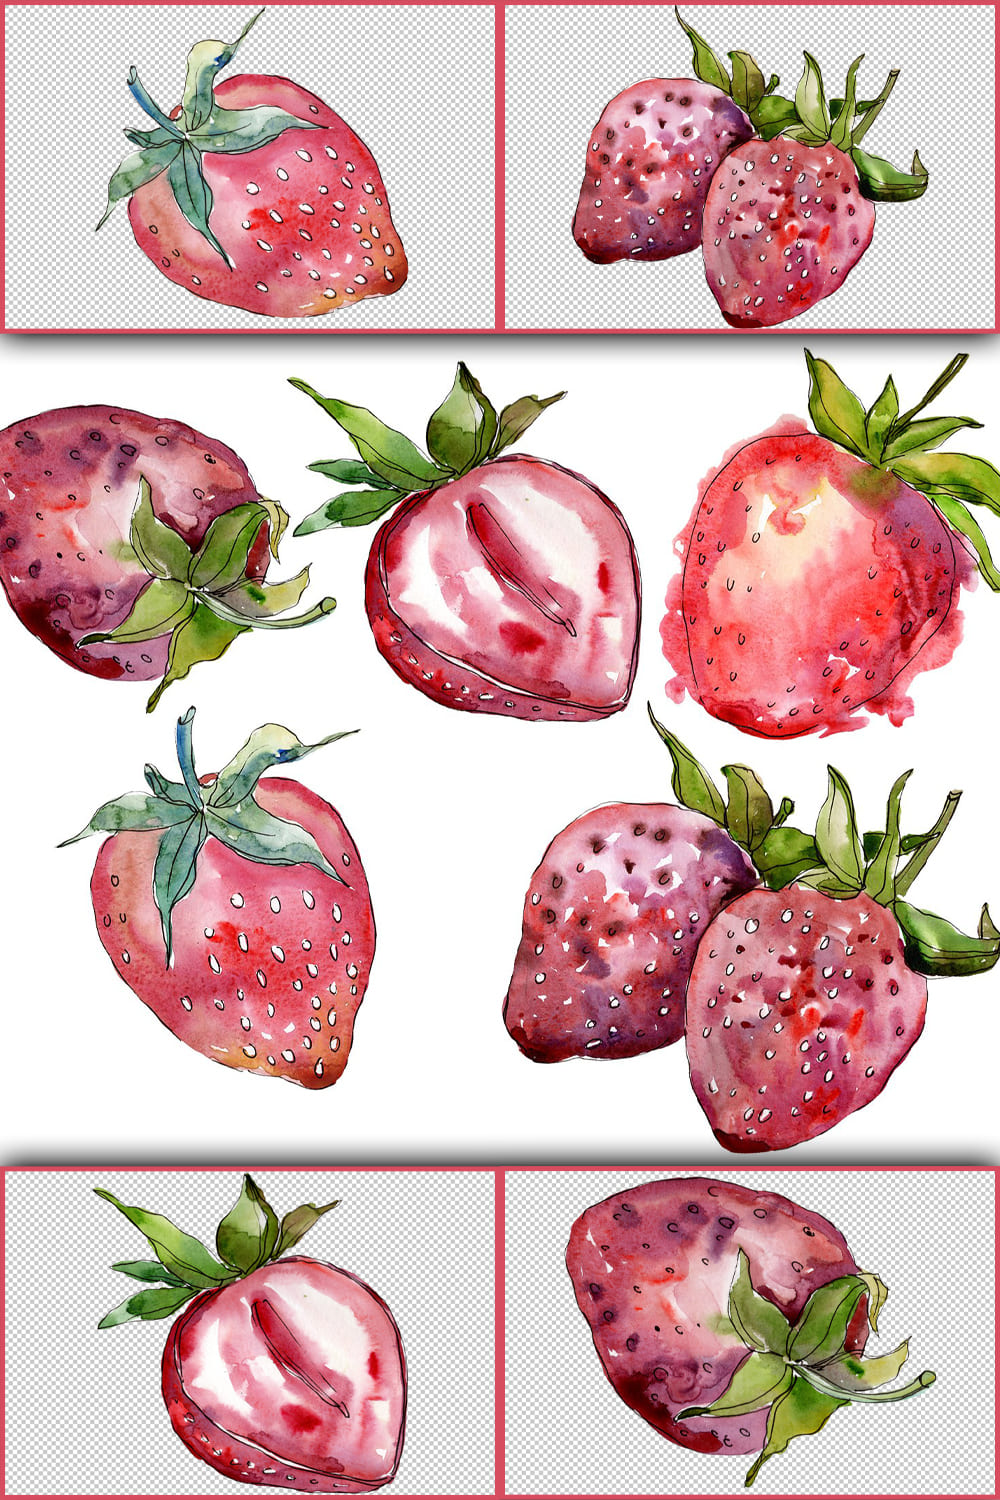 273747 strawberry cultivar malvina watercolor png pinterest 1000 1500 970